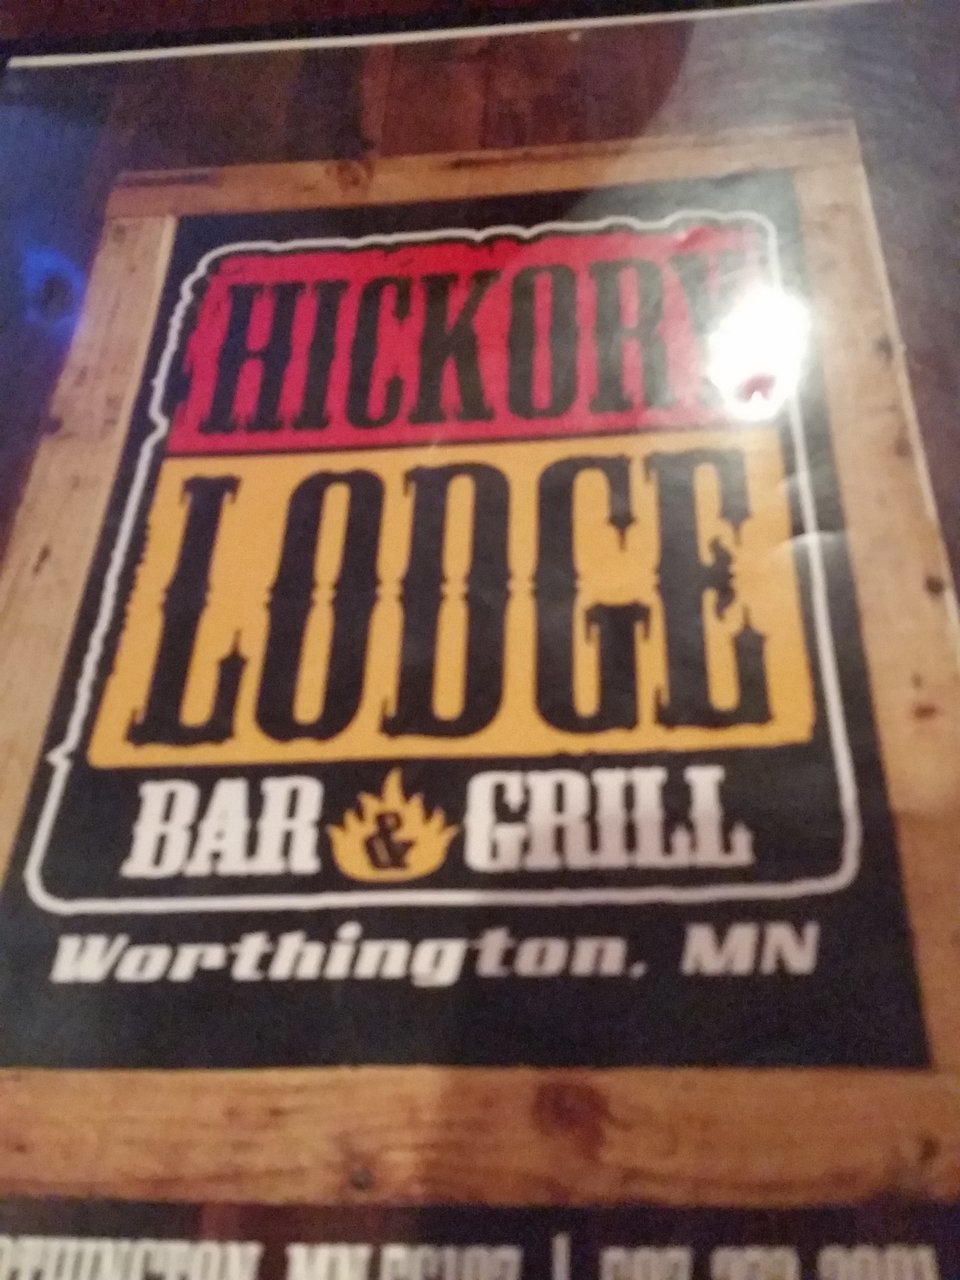 Hickory Lodge Bar & Grill